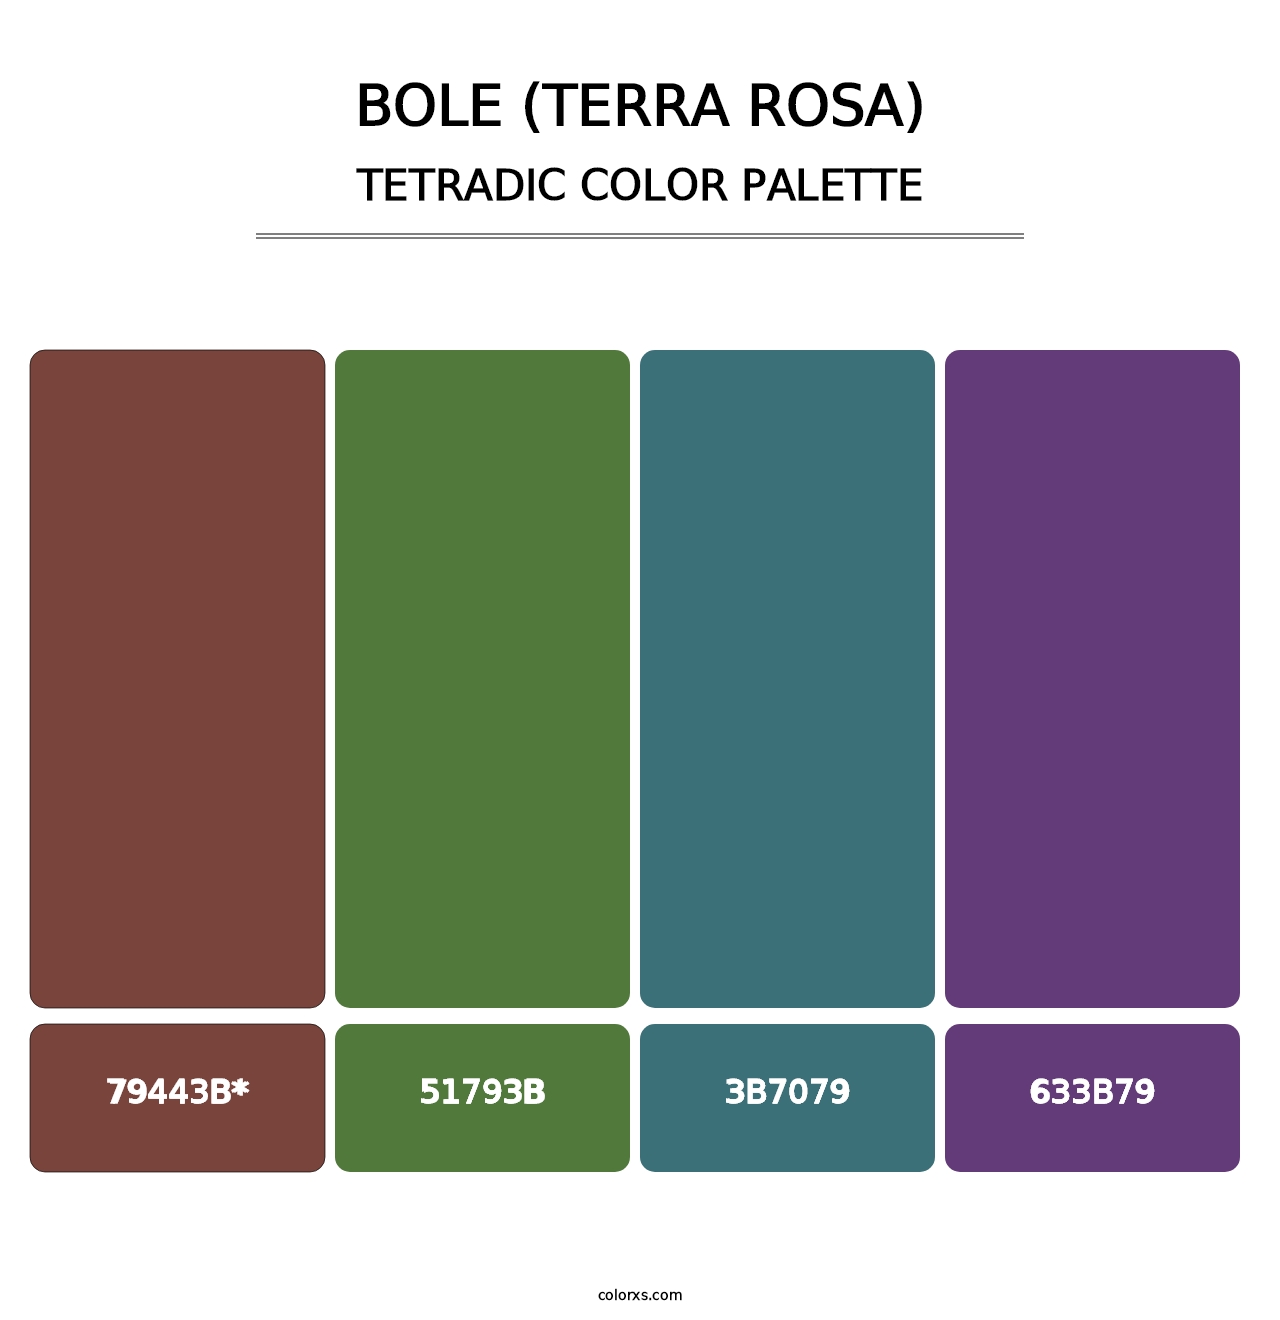 Bole (Terra Rosa) - Tetradic Color Palette